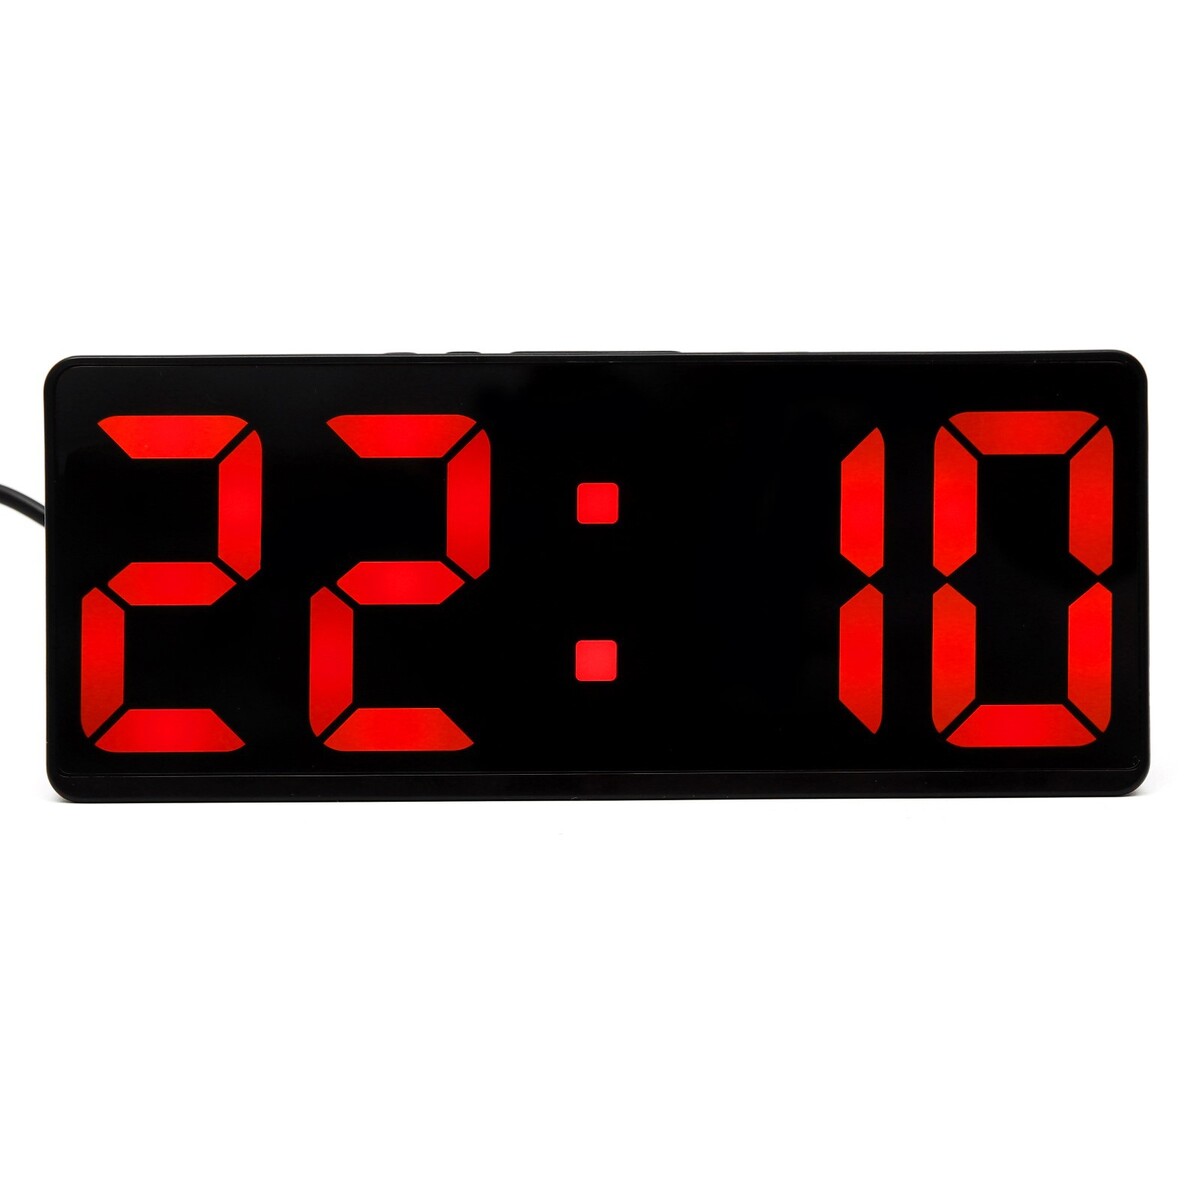 Часы - будильник электронные настольные с термометром, календарем, 15 х 6.3 см, ааа, usb No brand